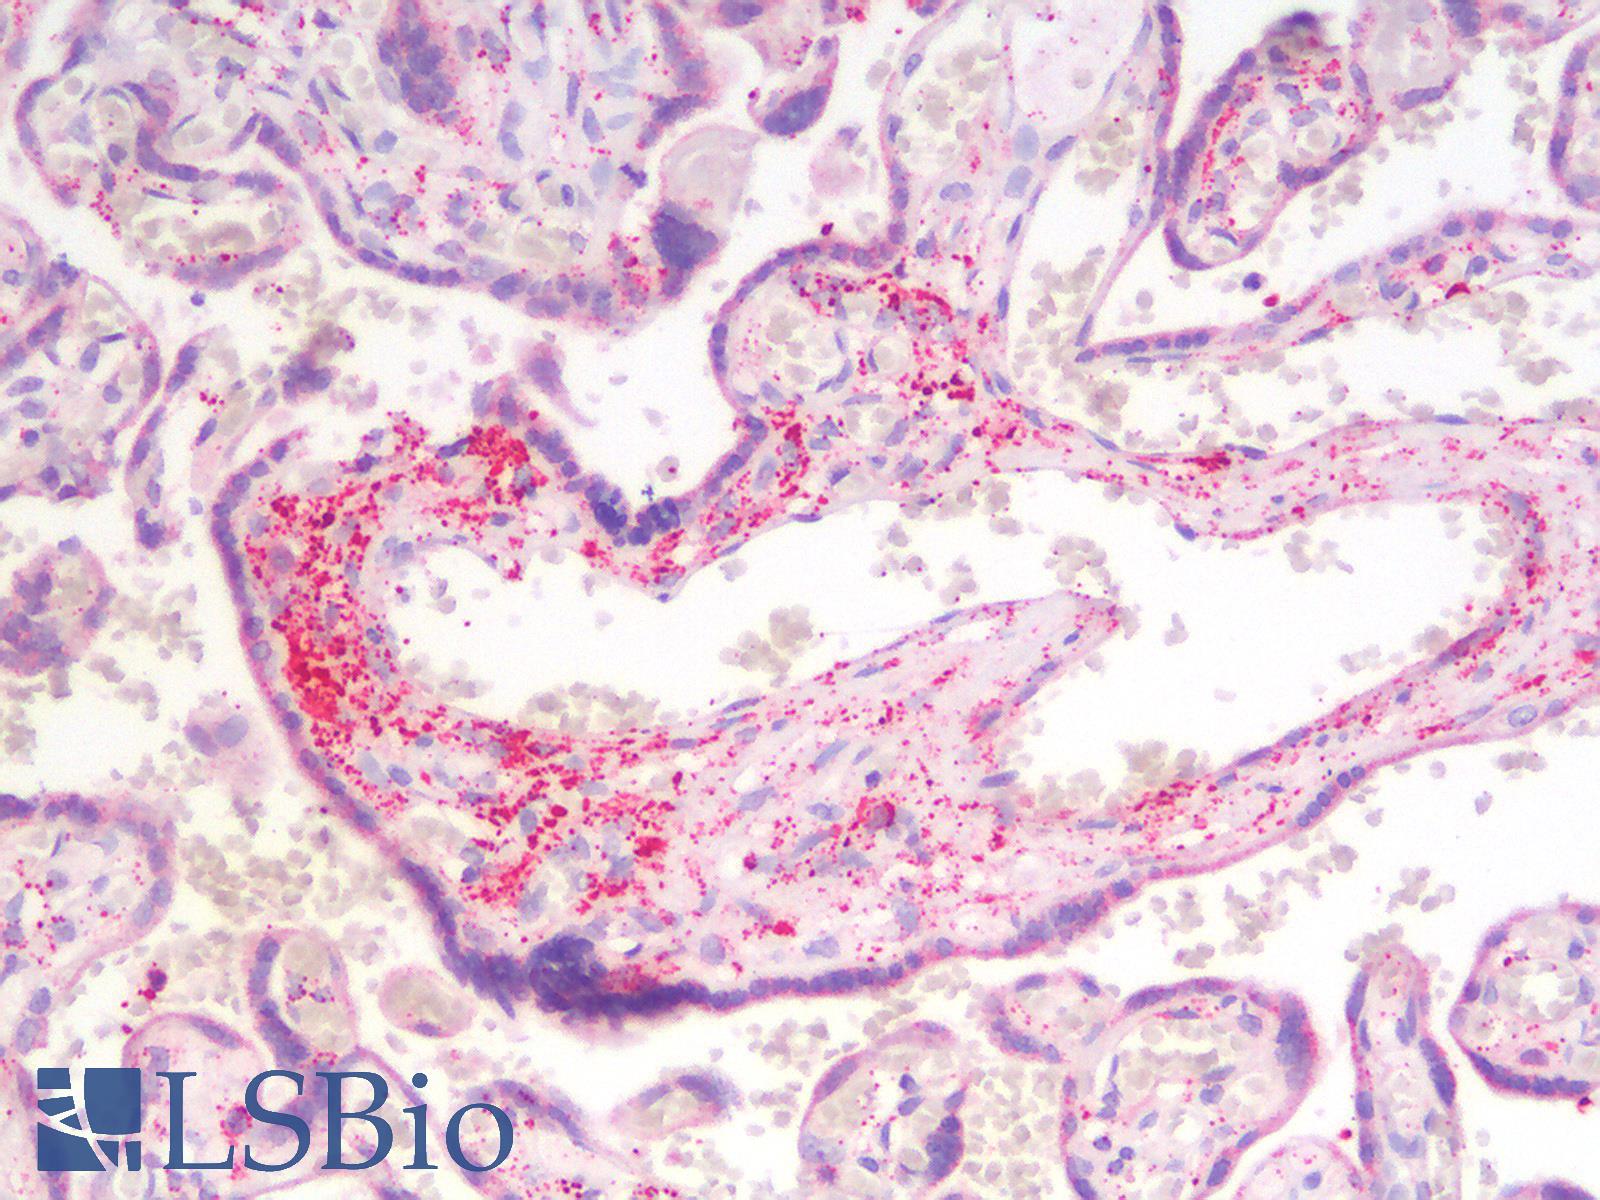 MMP2 Antibody - Human Placenta: Formalin-Fixed, Paraffin-Embedded (FFPE)